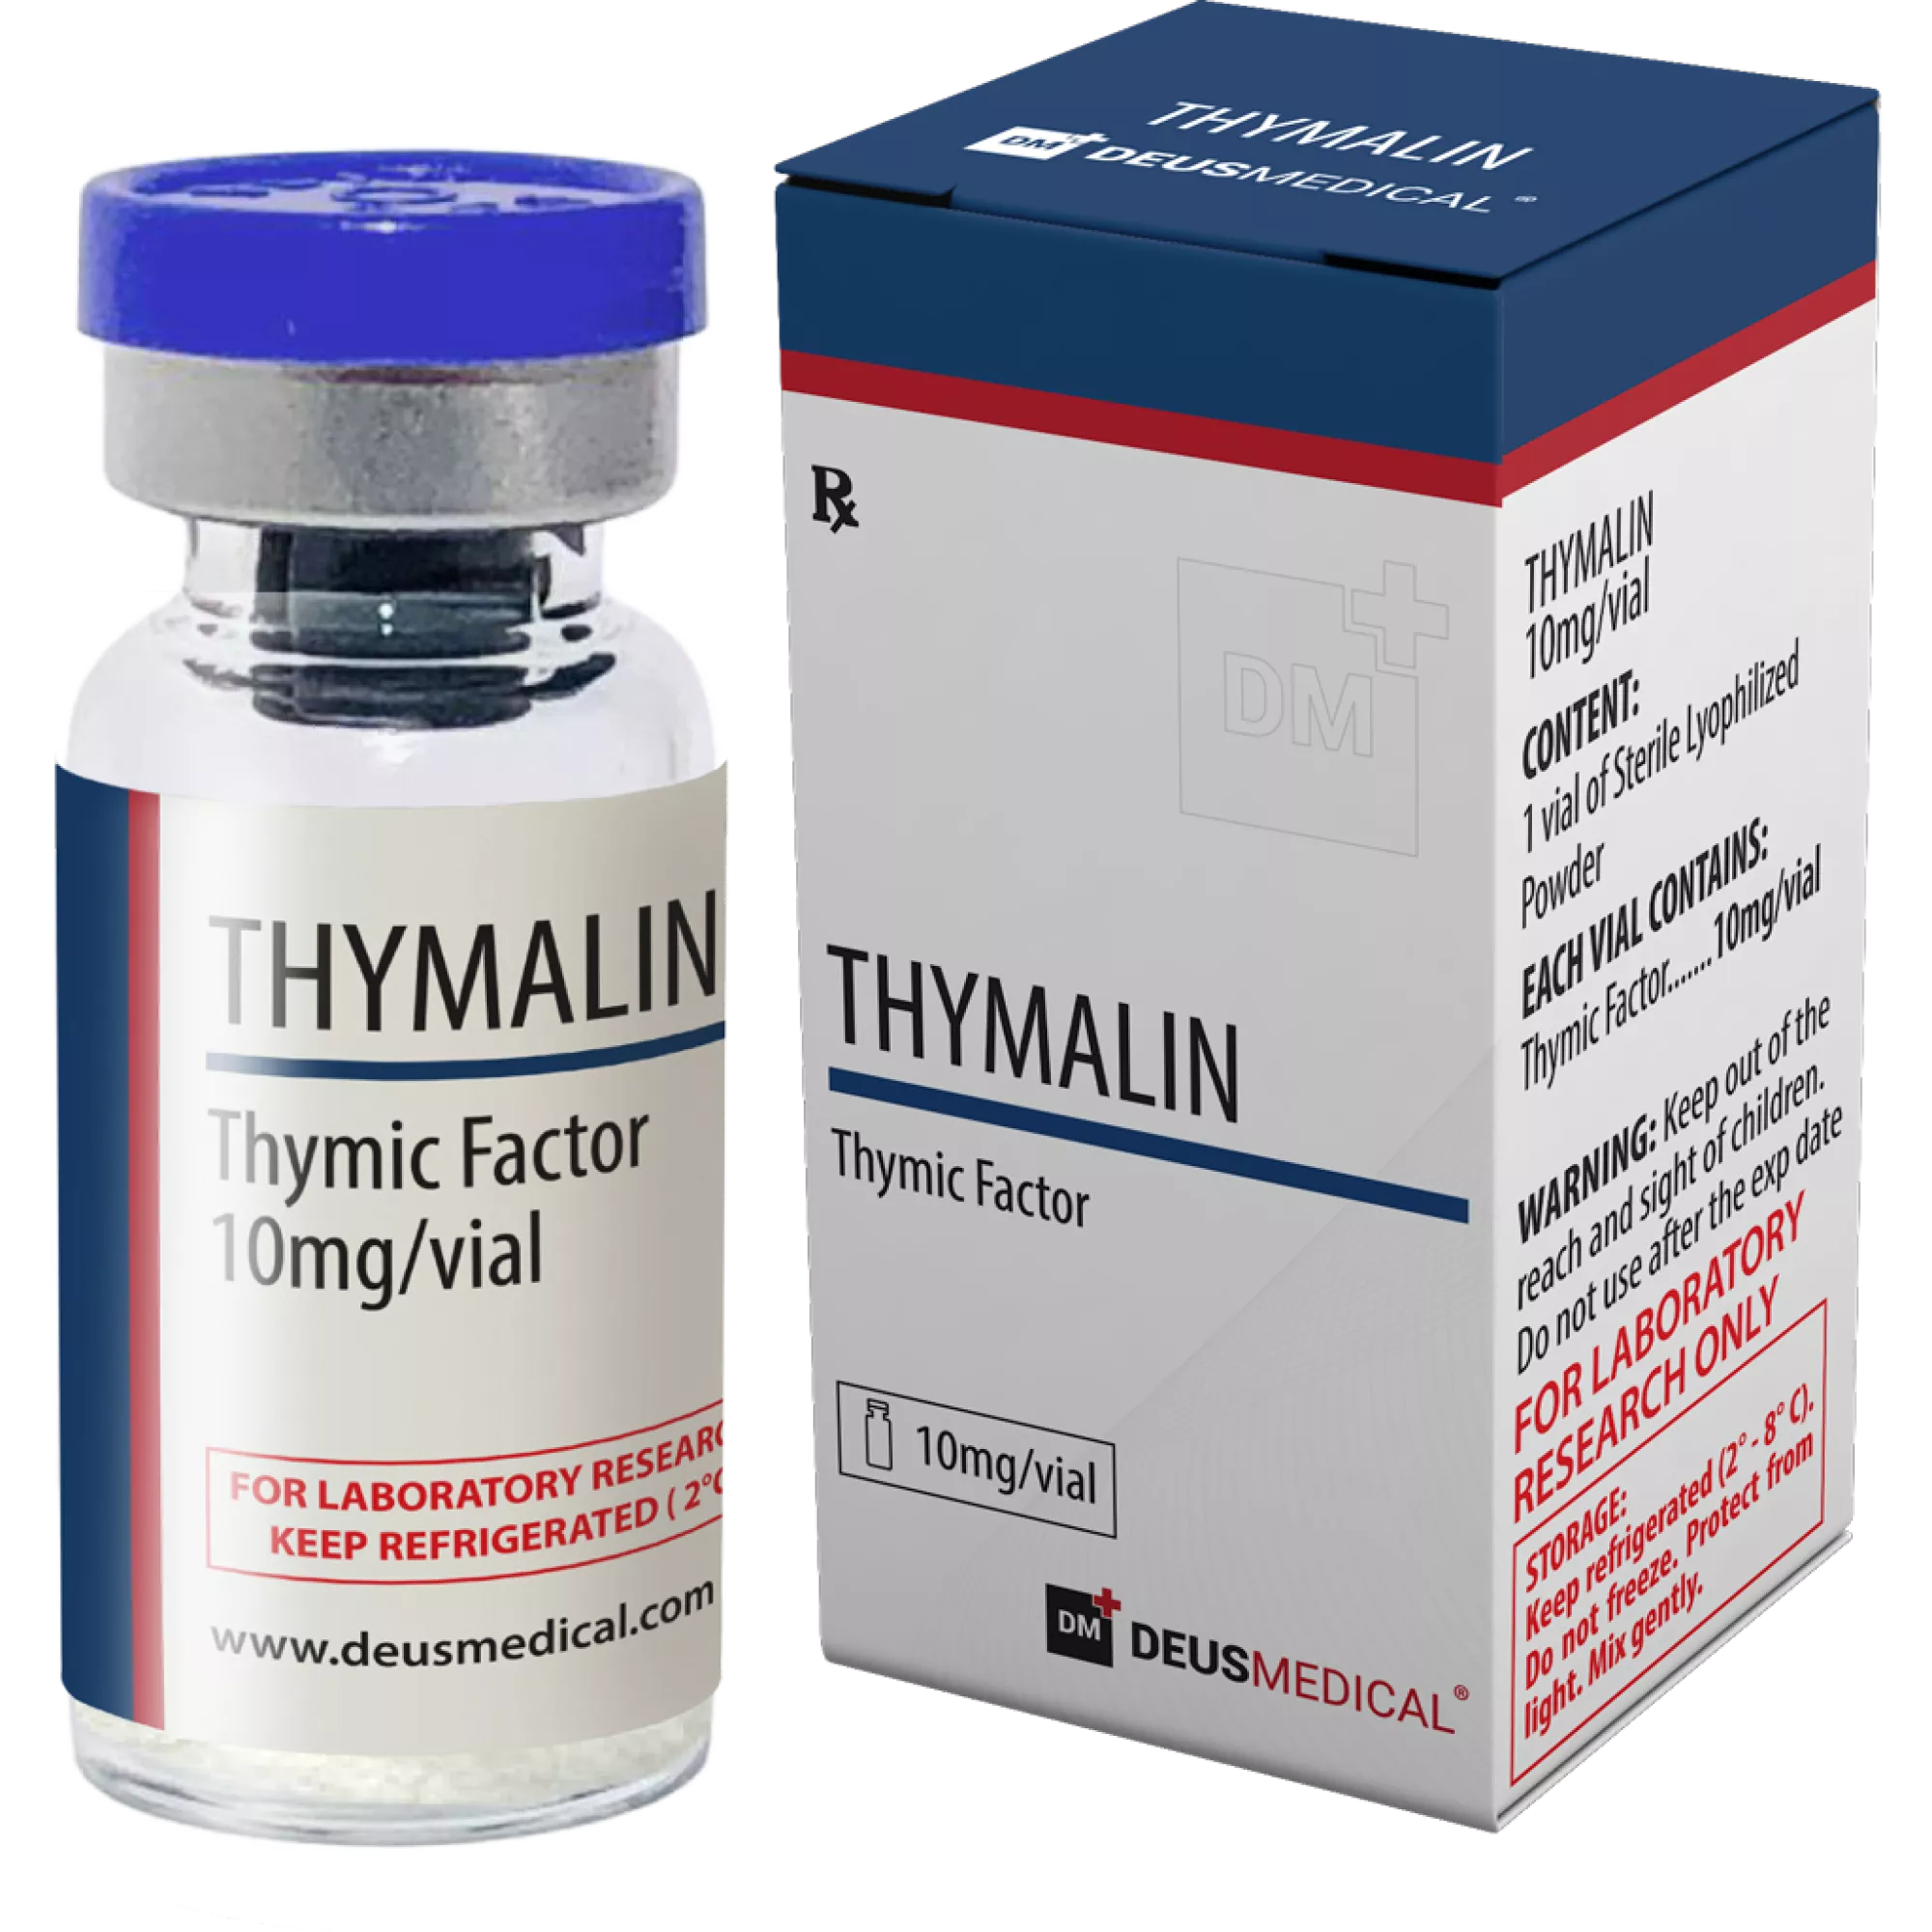 THYMALIN (Thymic Factor), Deus Medical, Buy Steroids Online - www.deuspower.shop